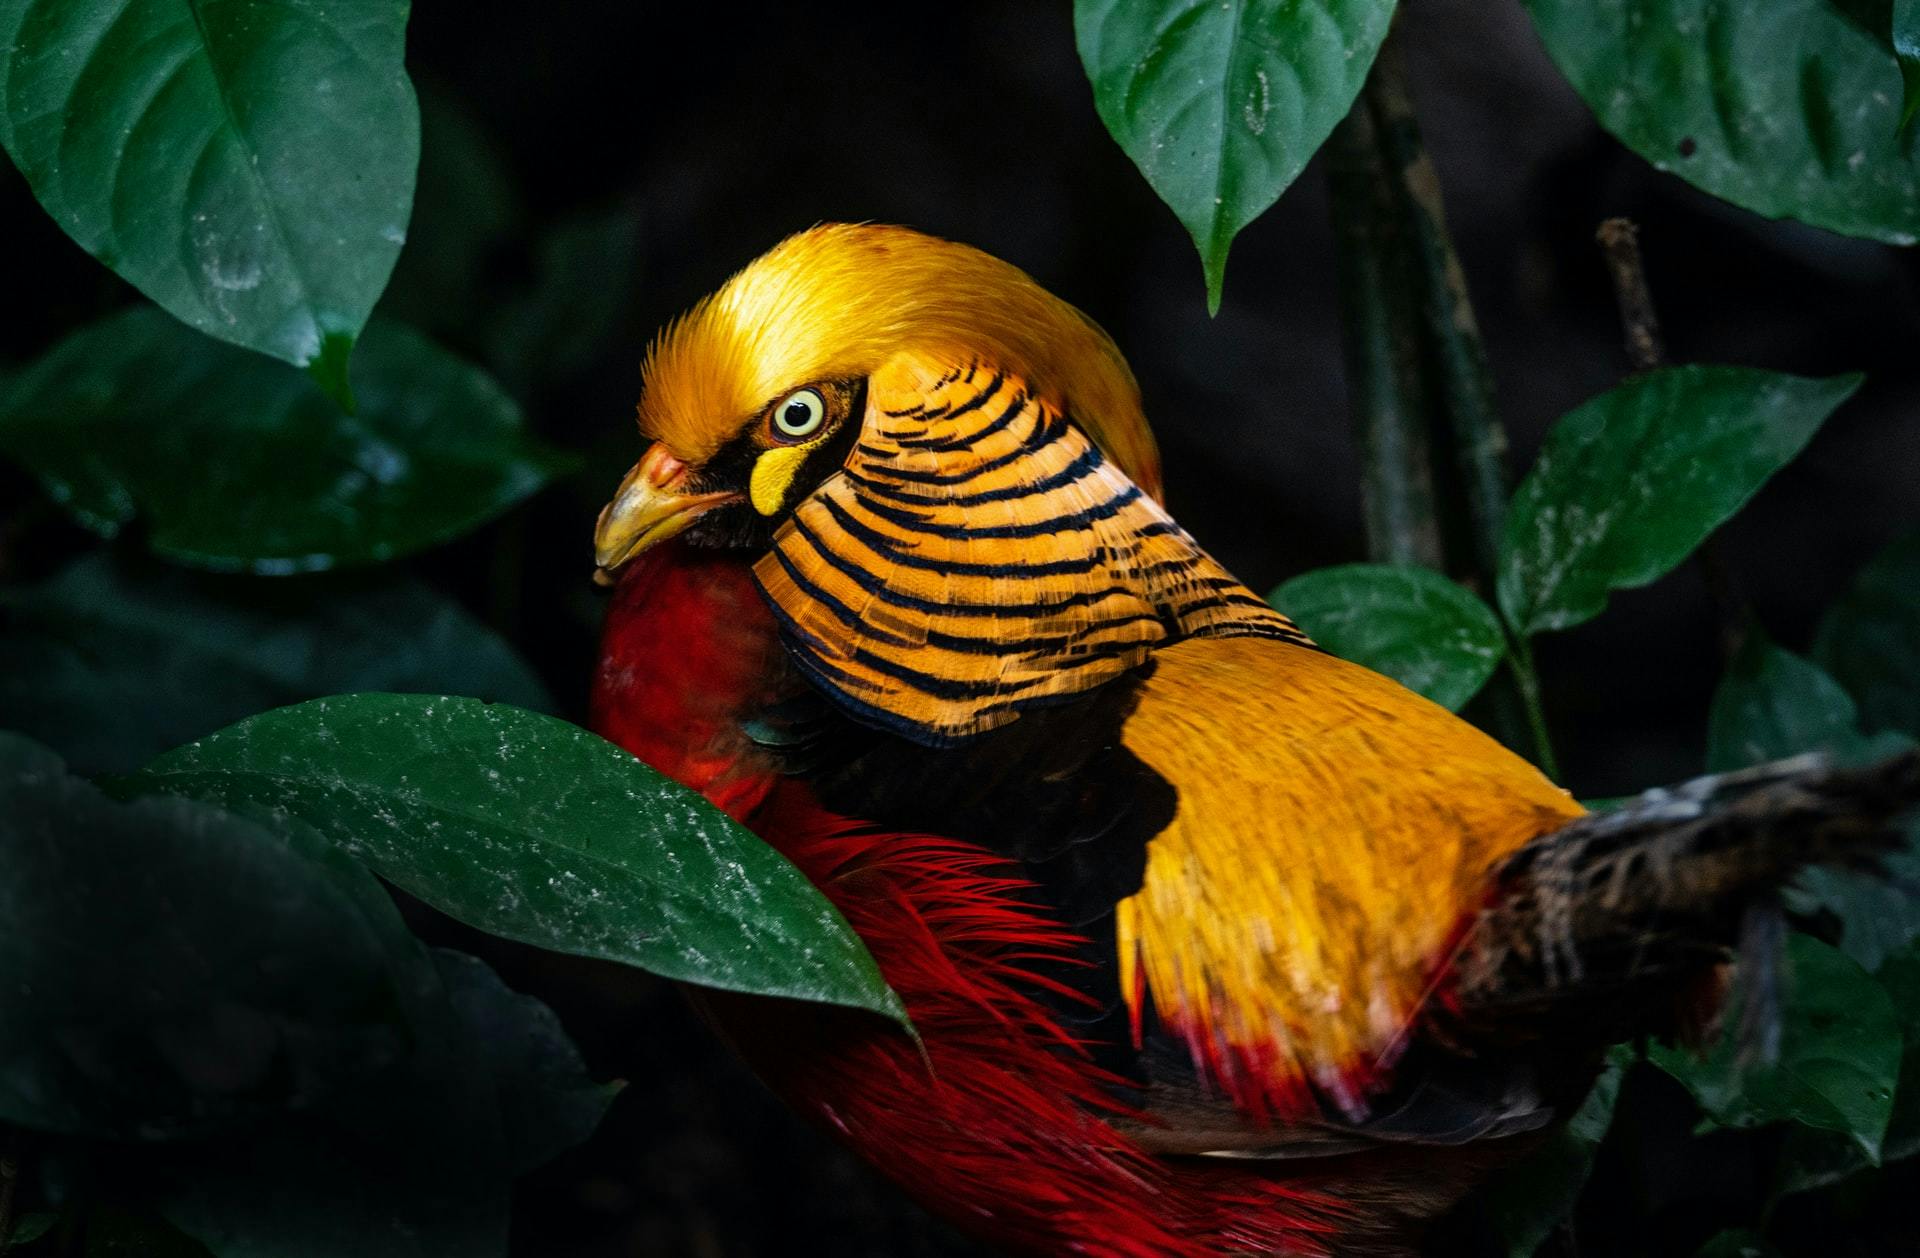 A colorful bird